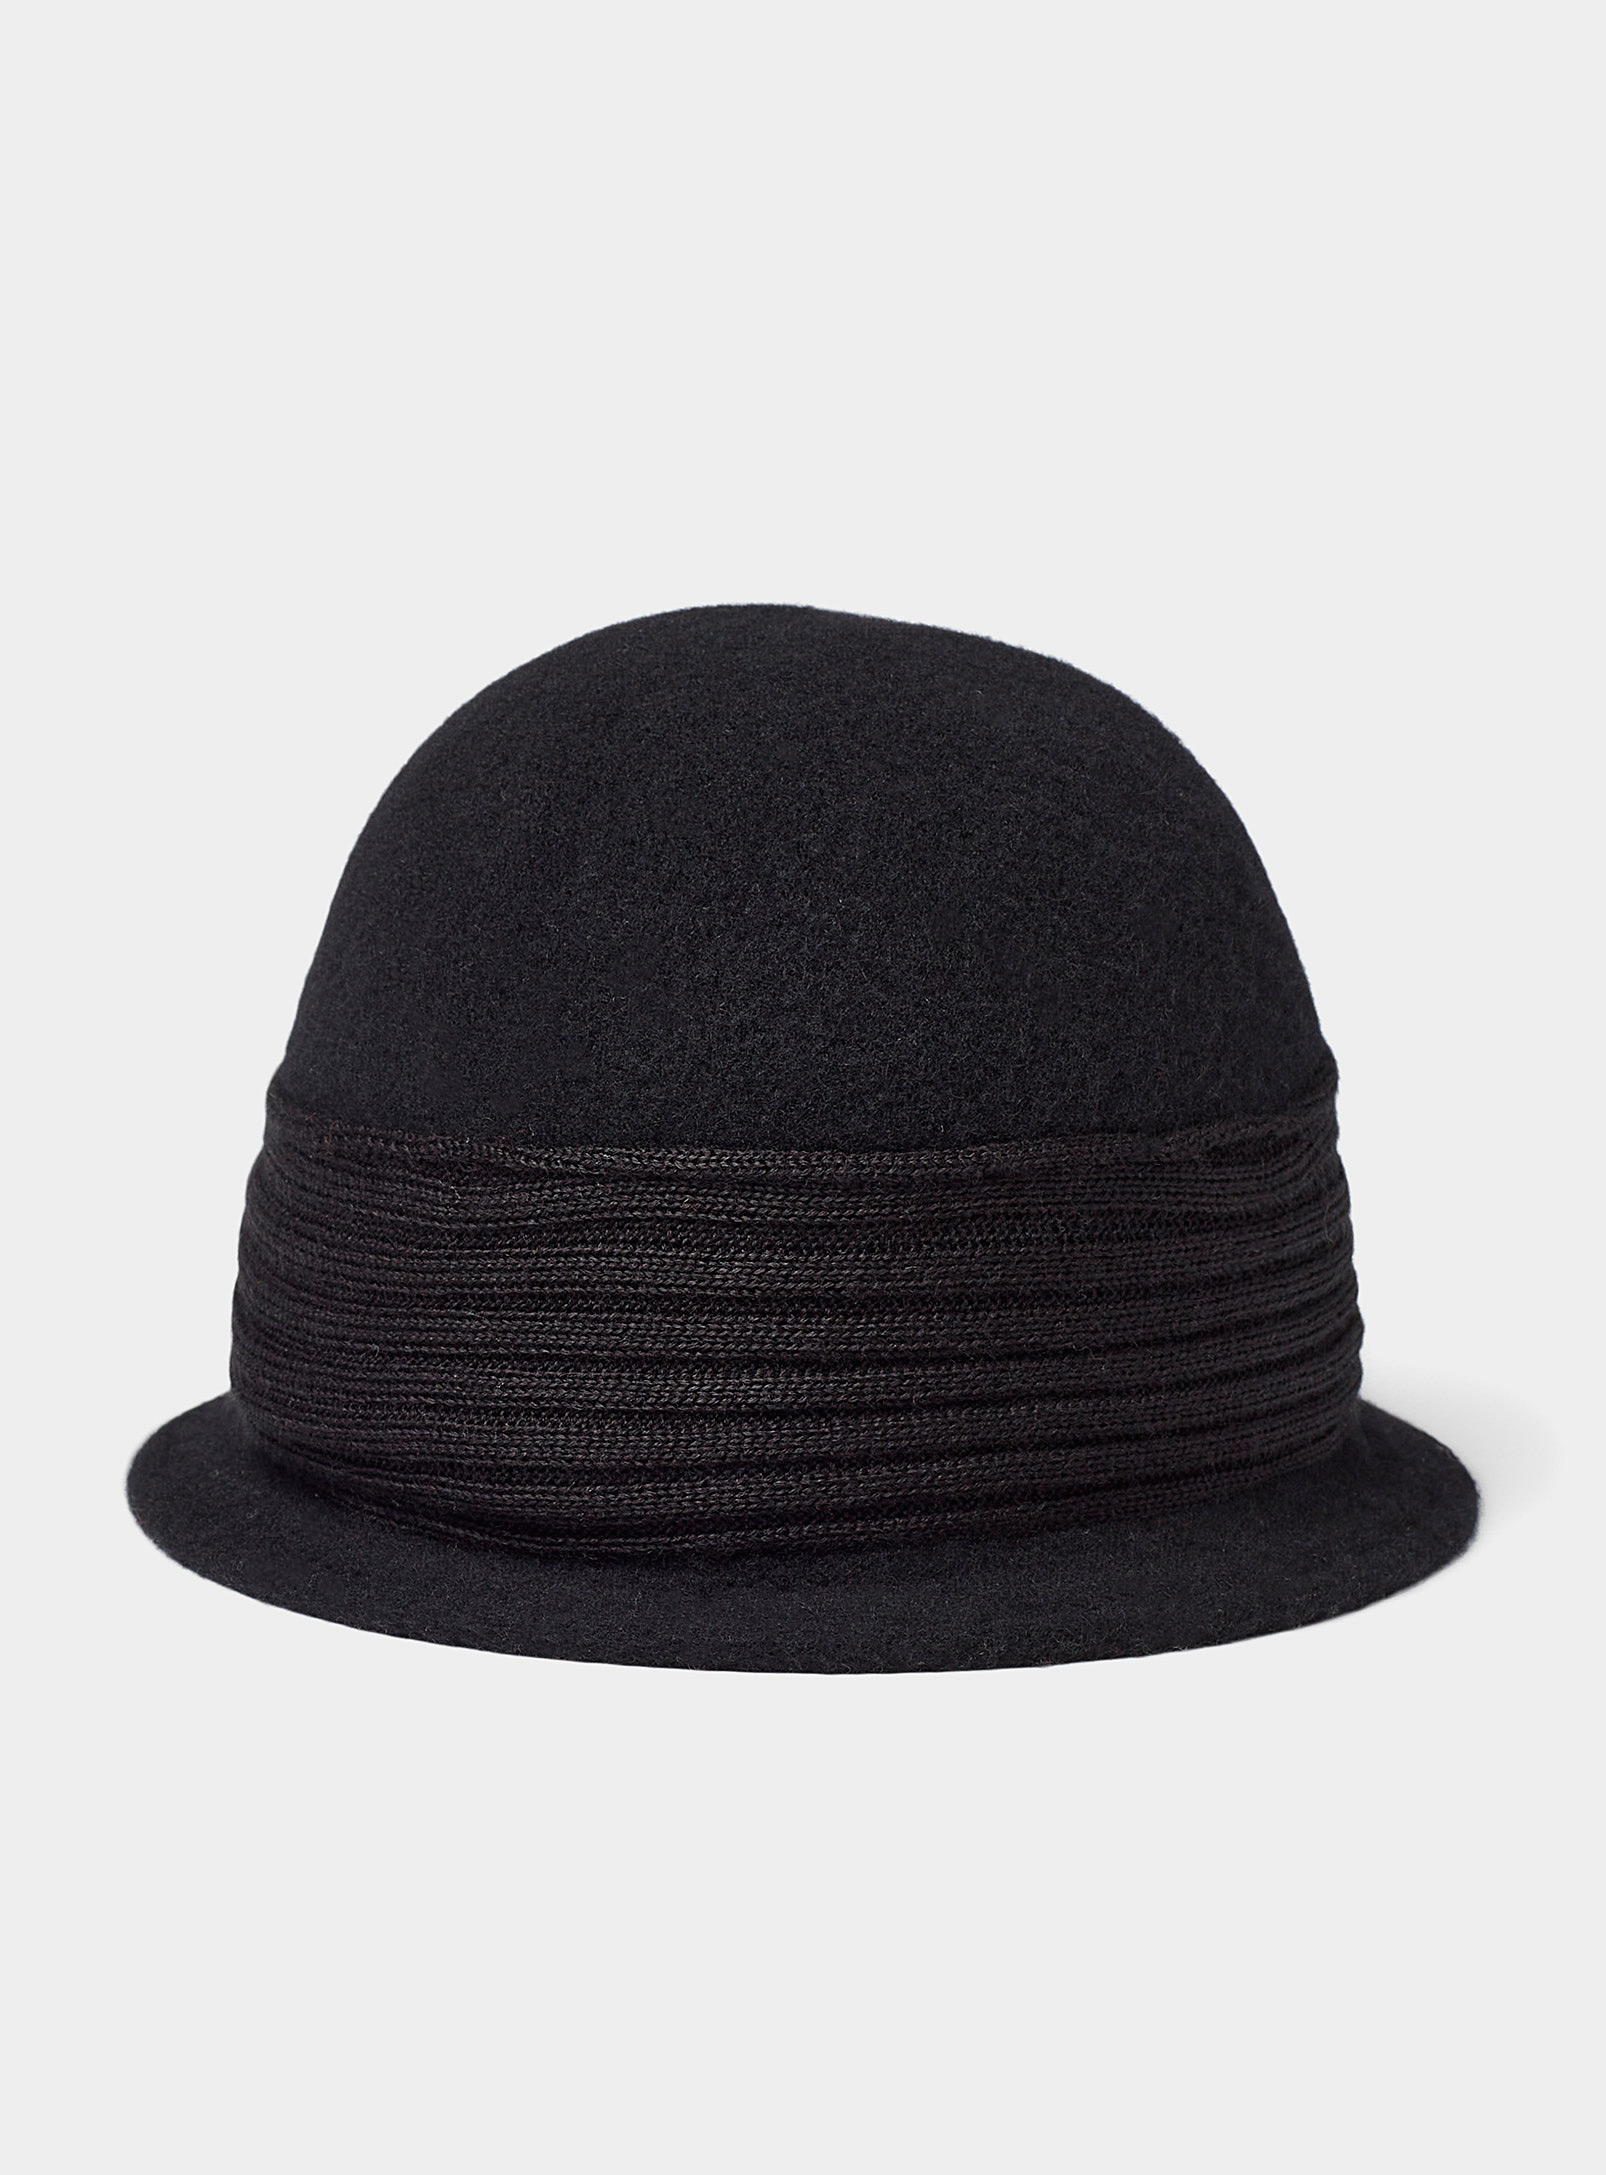 Canadian Hat